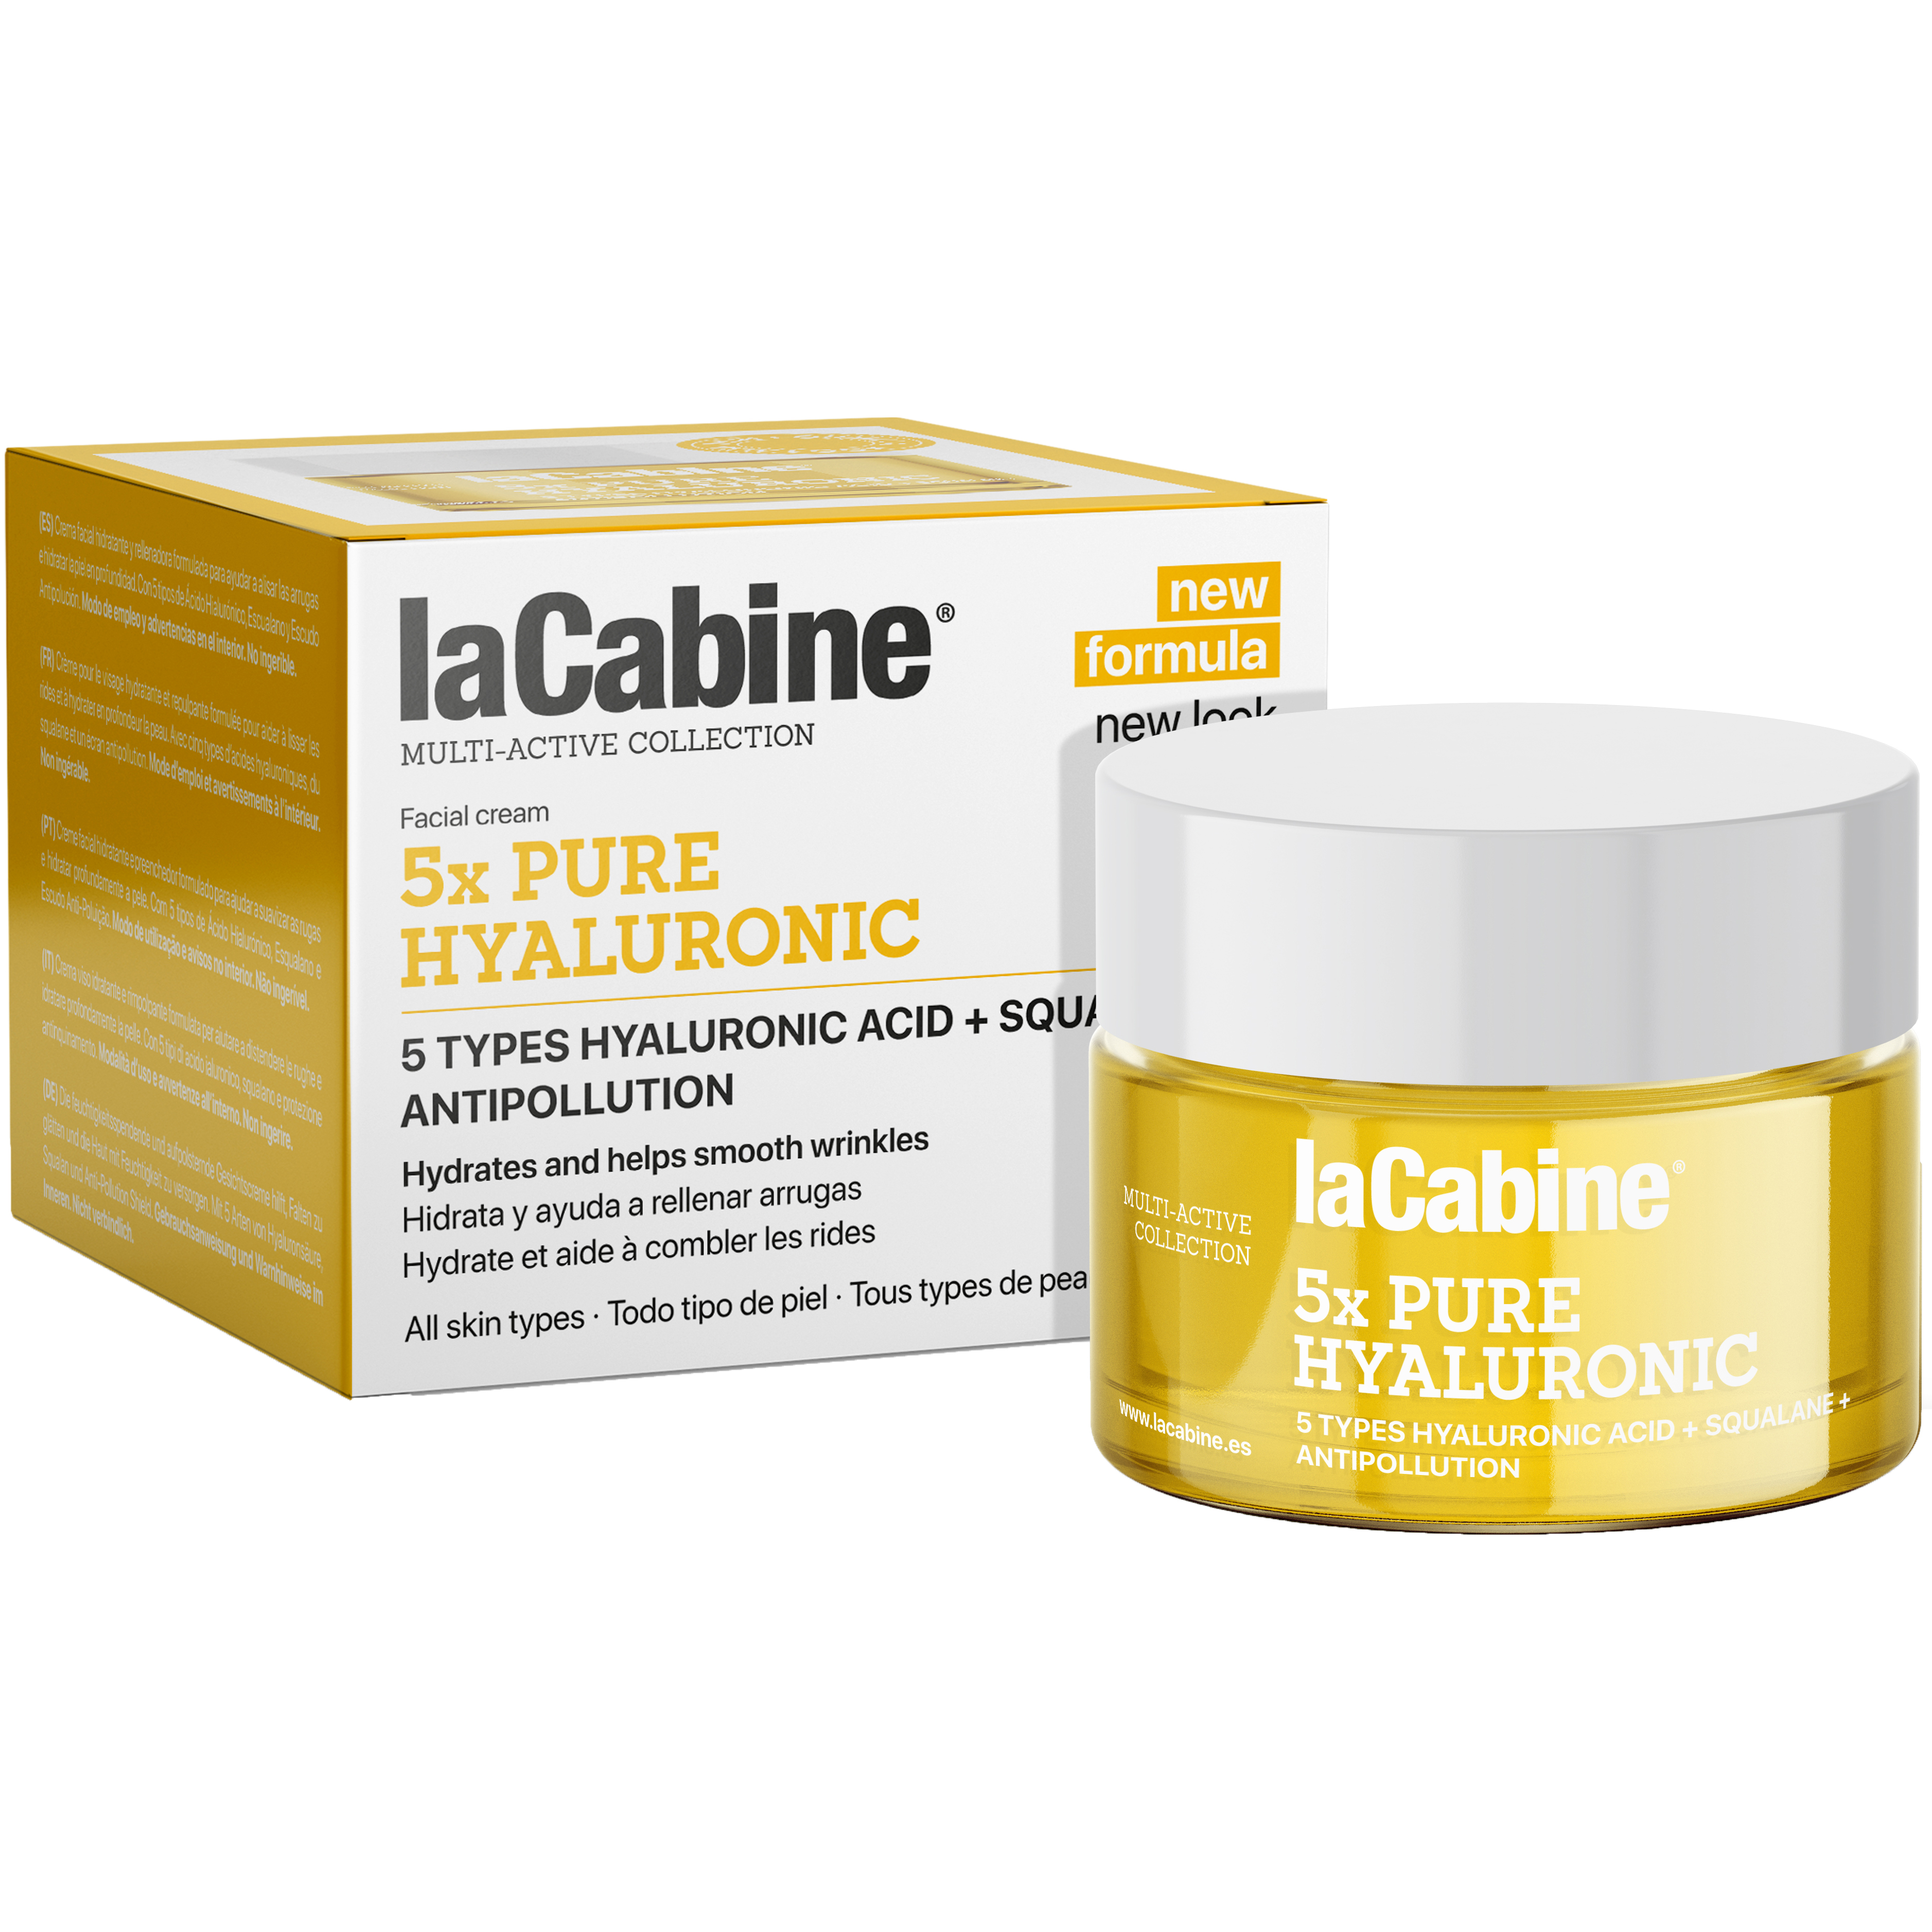 Увлажняющий крем против морщин La Cabine 5xPure Hyaluronic с 5 гиалуроновыми кислотами 50 мл - фото 1